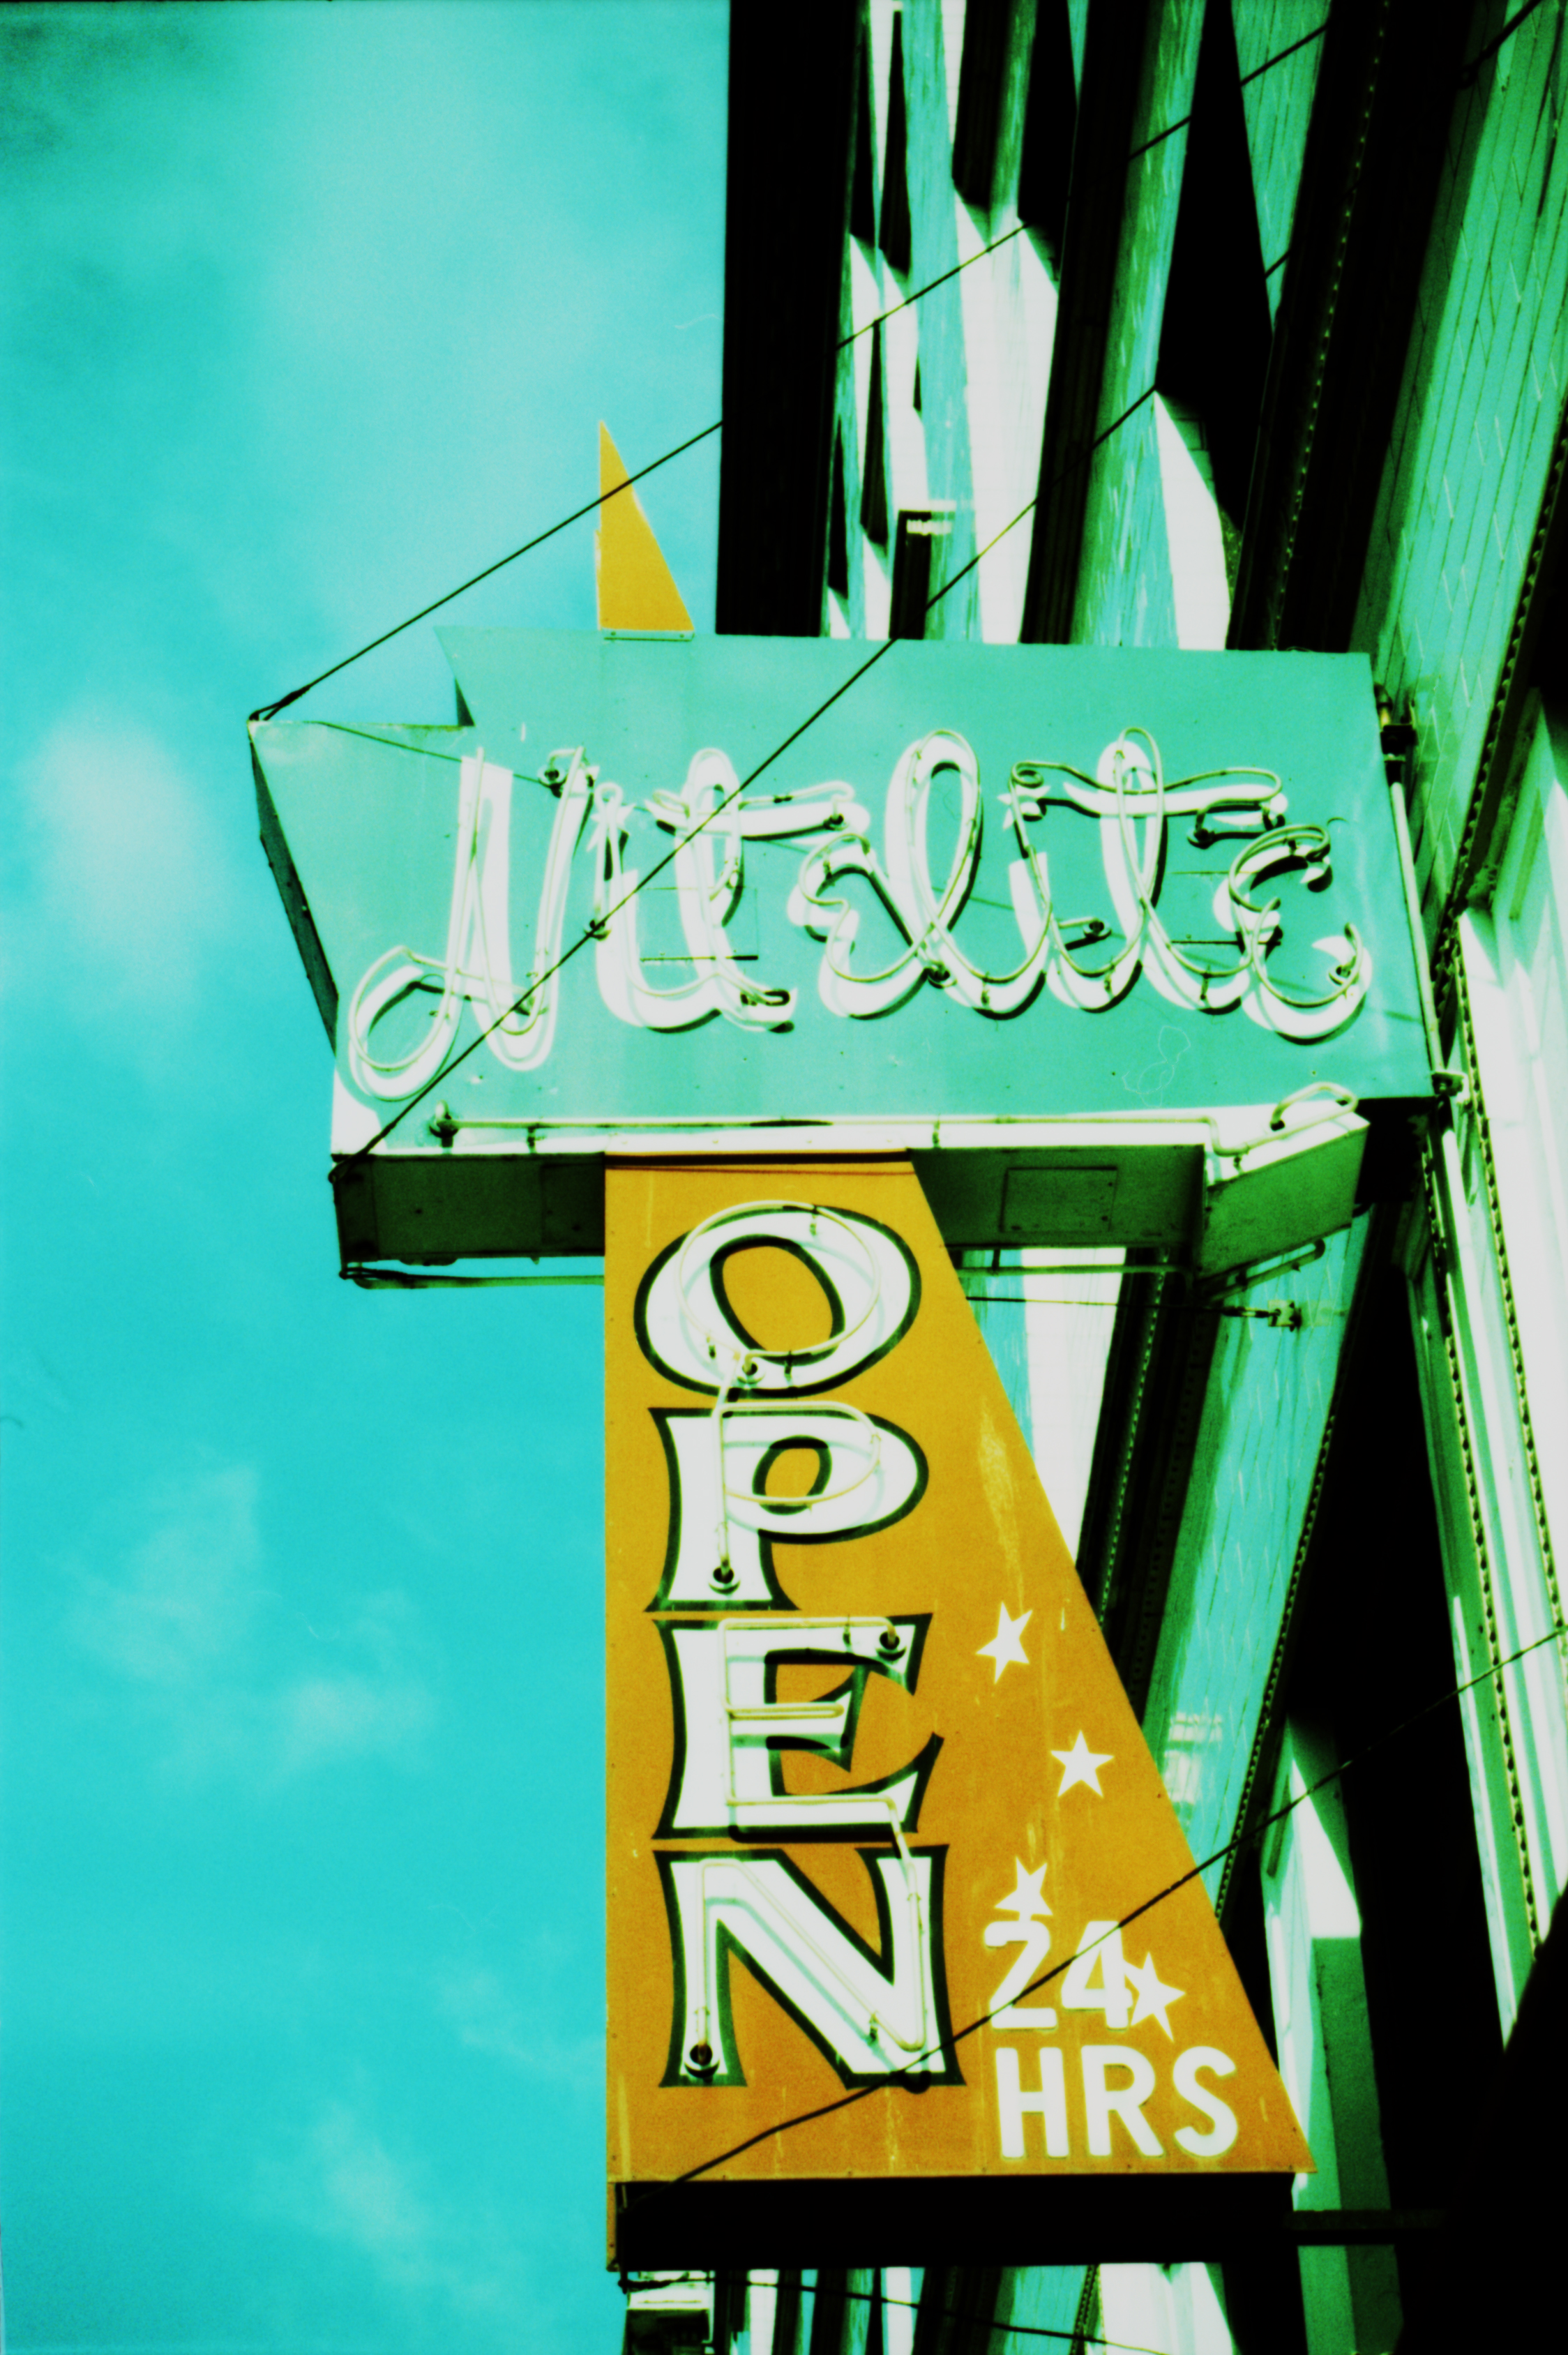 Open 24hrs. – Seattle Nitelite neon sign